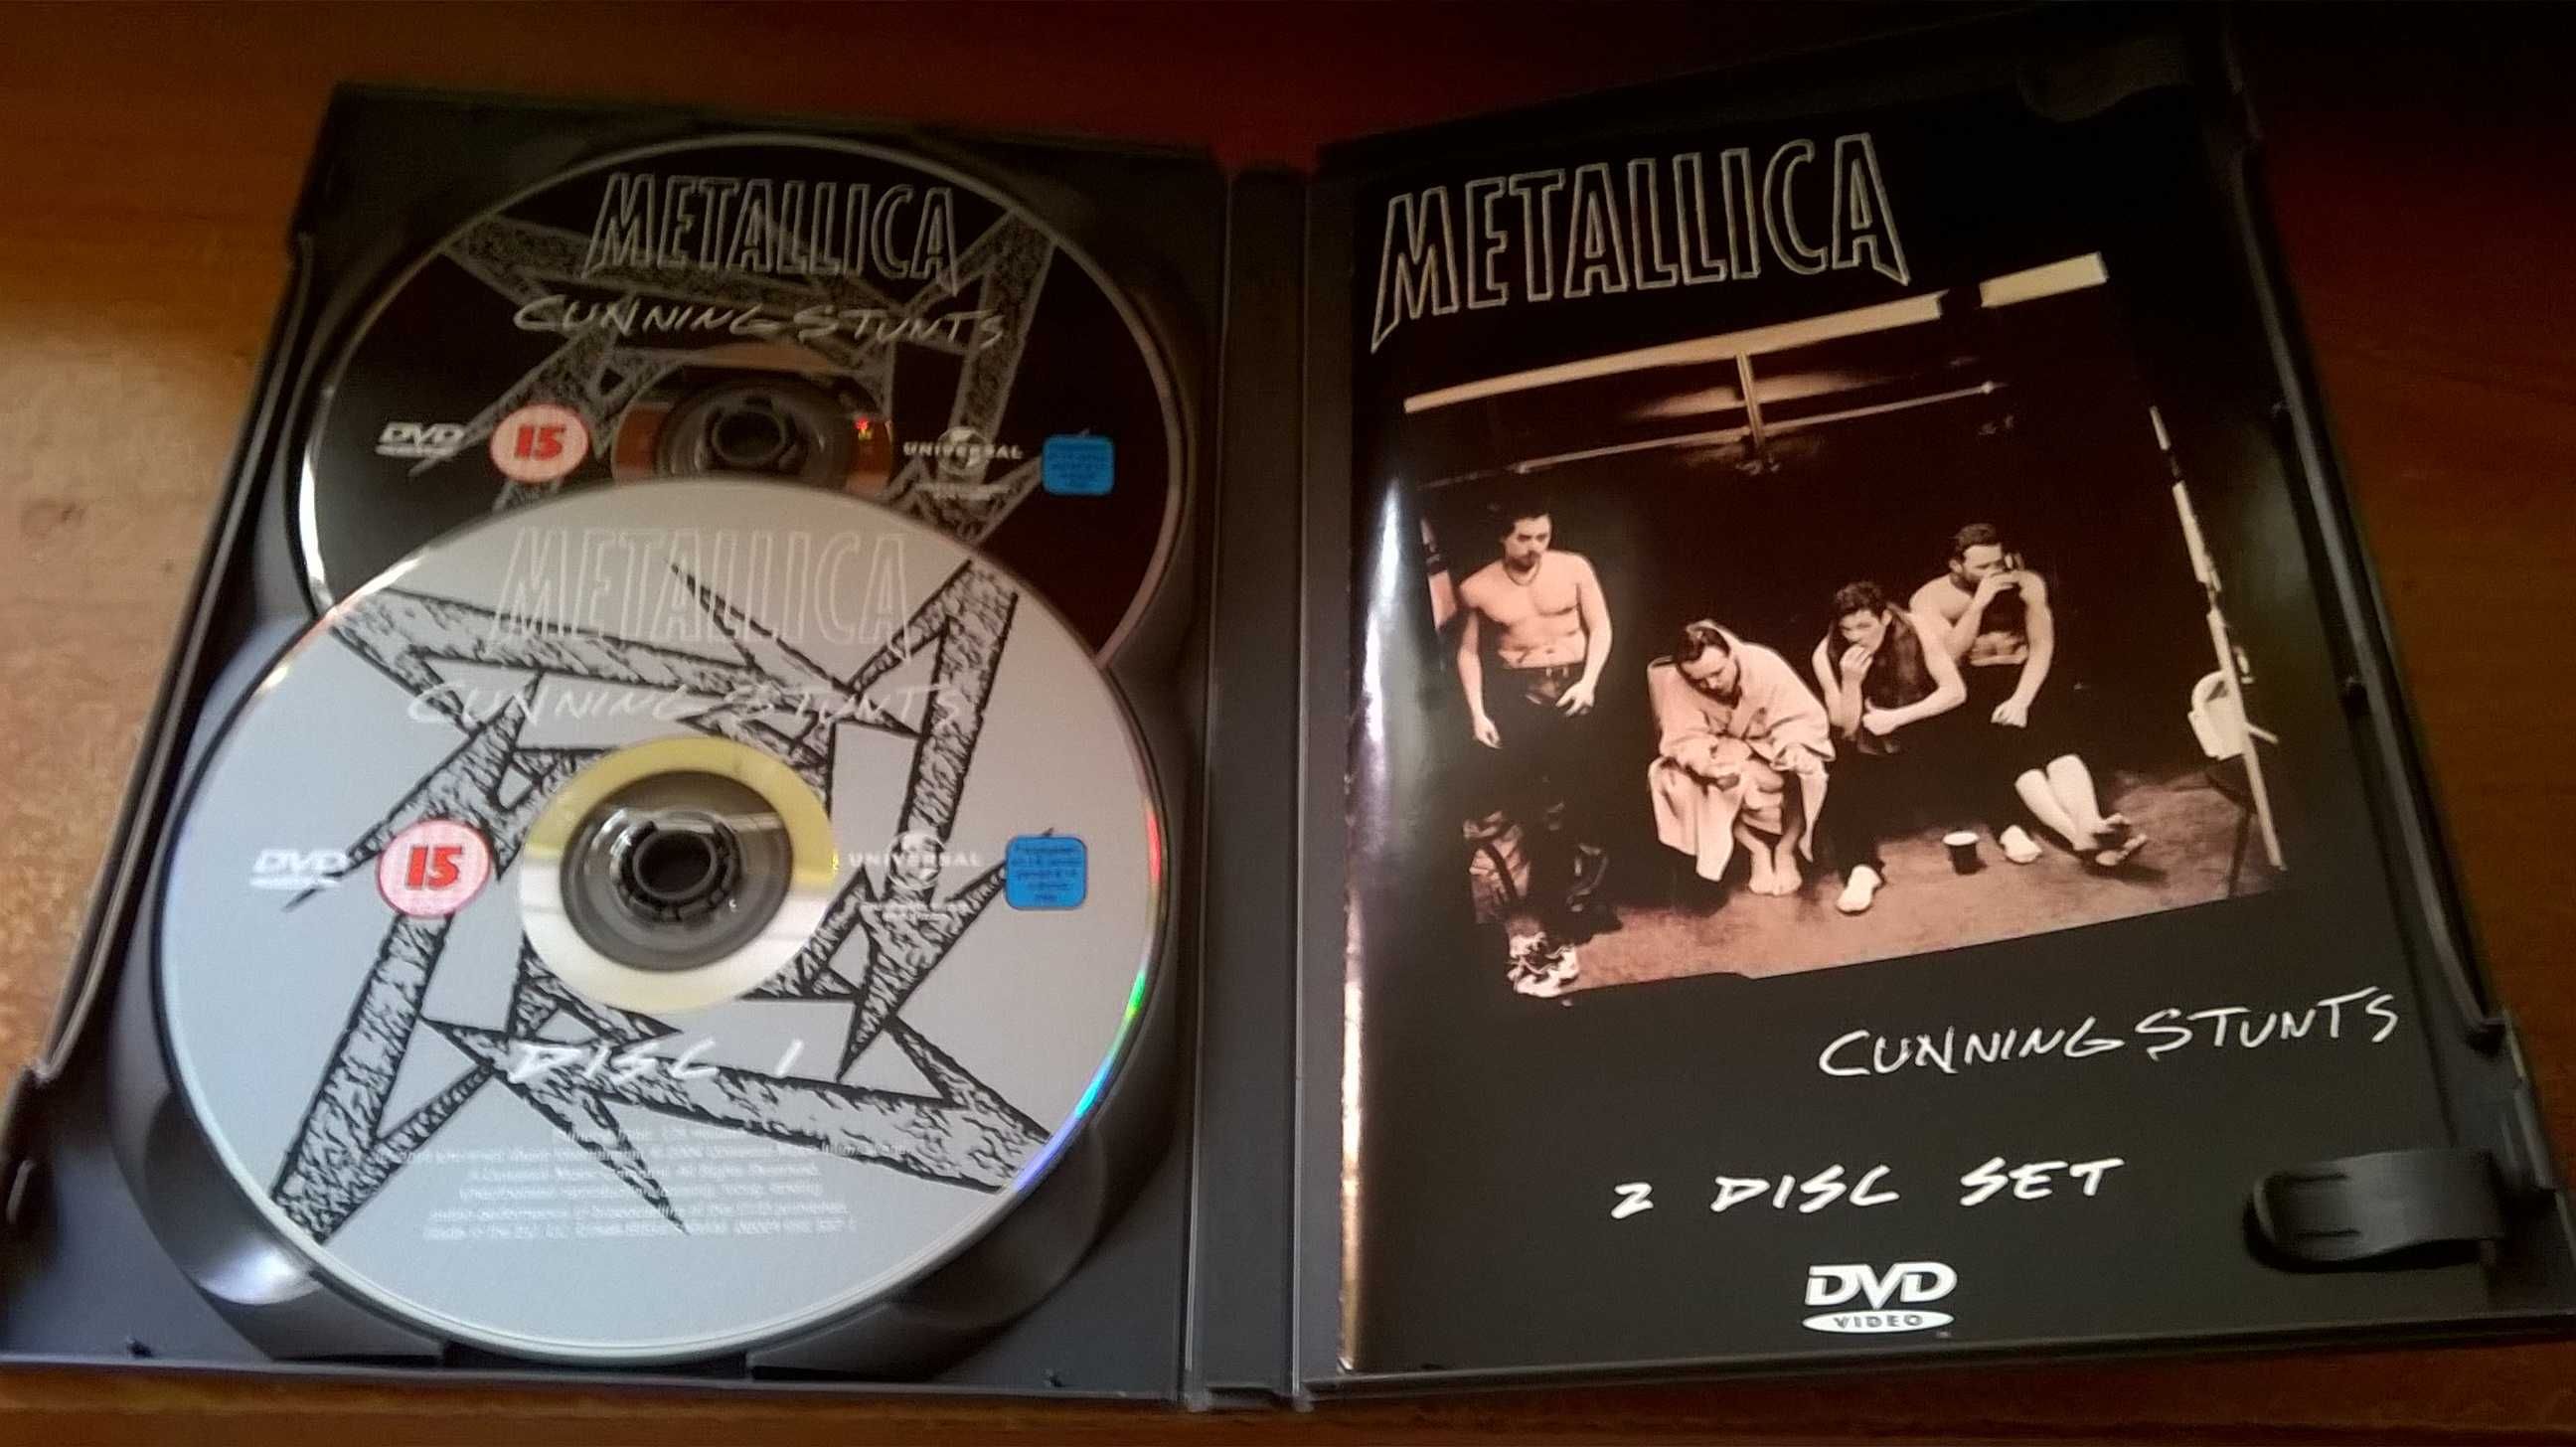 Metallica - Cunning Stunts - DVD duplo